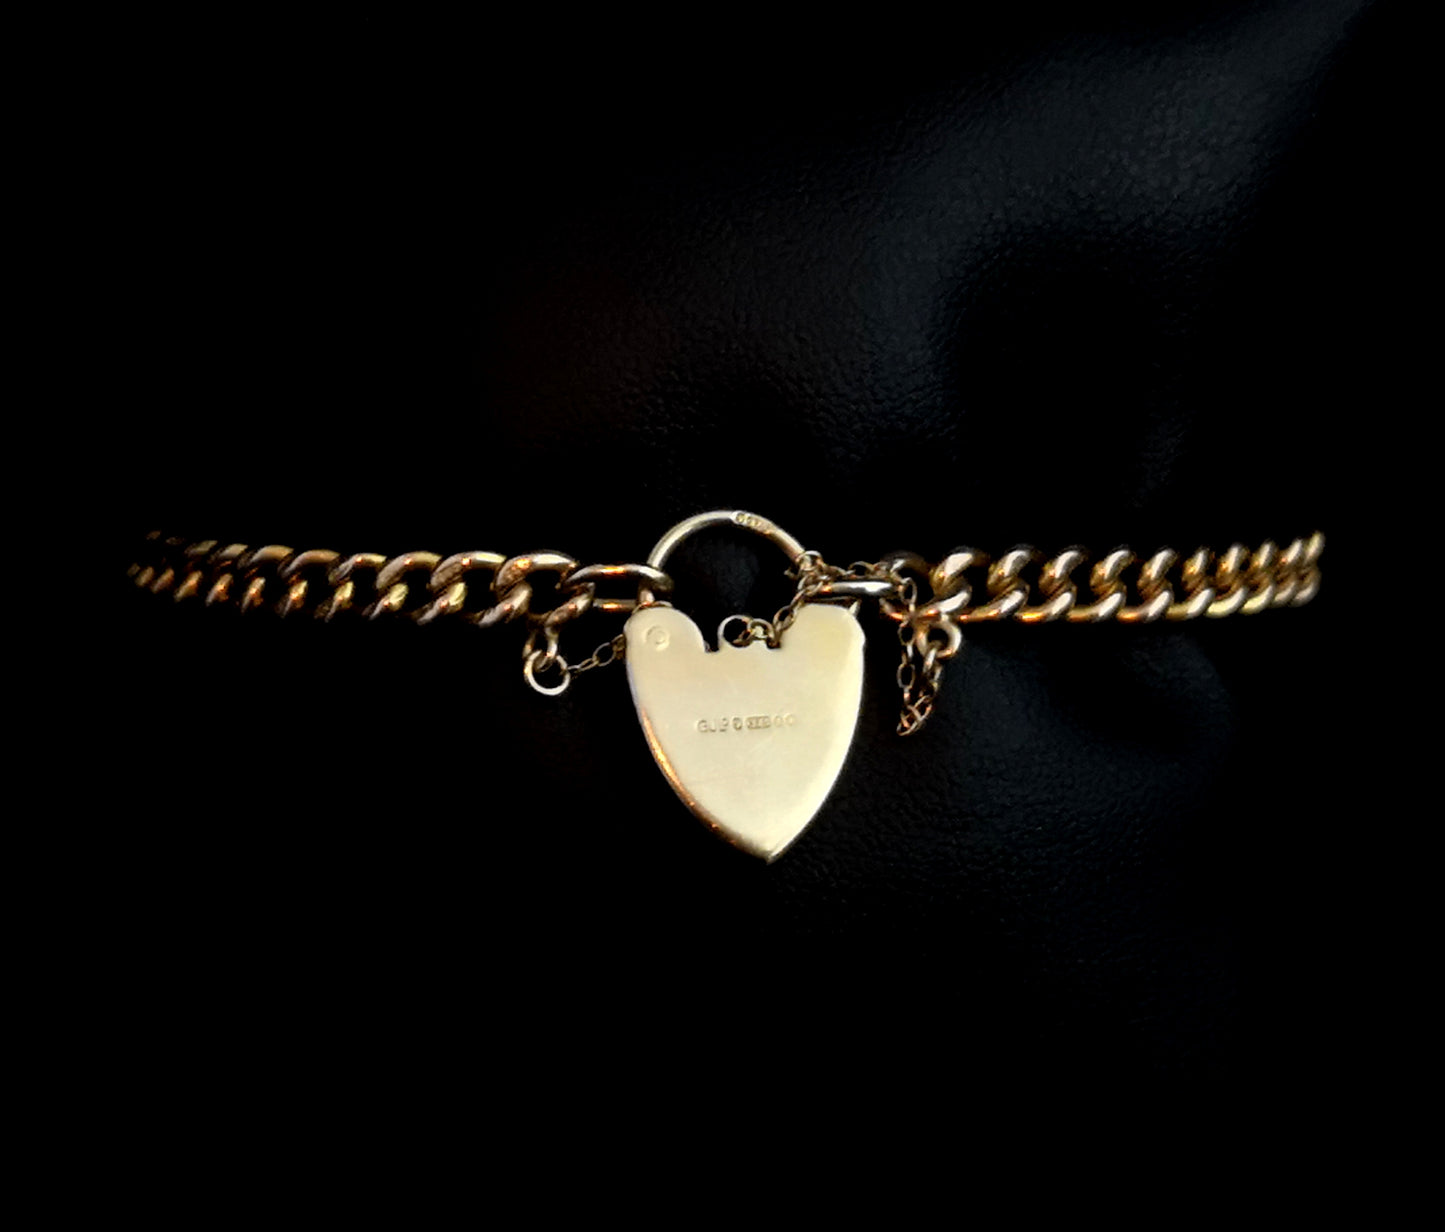 Antique 9ct gold curb link bracelet, heart padlock clasp